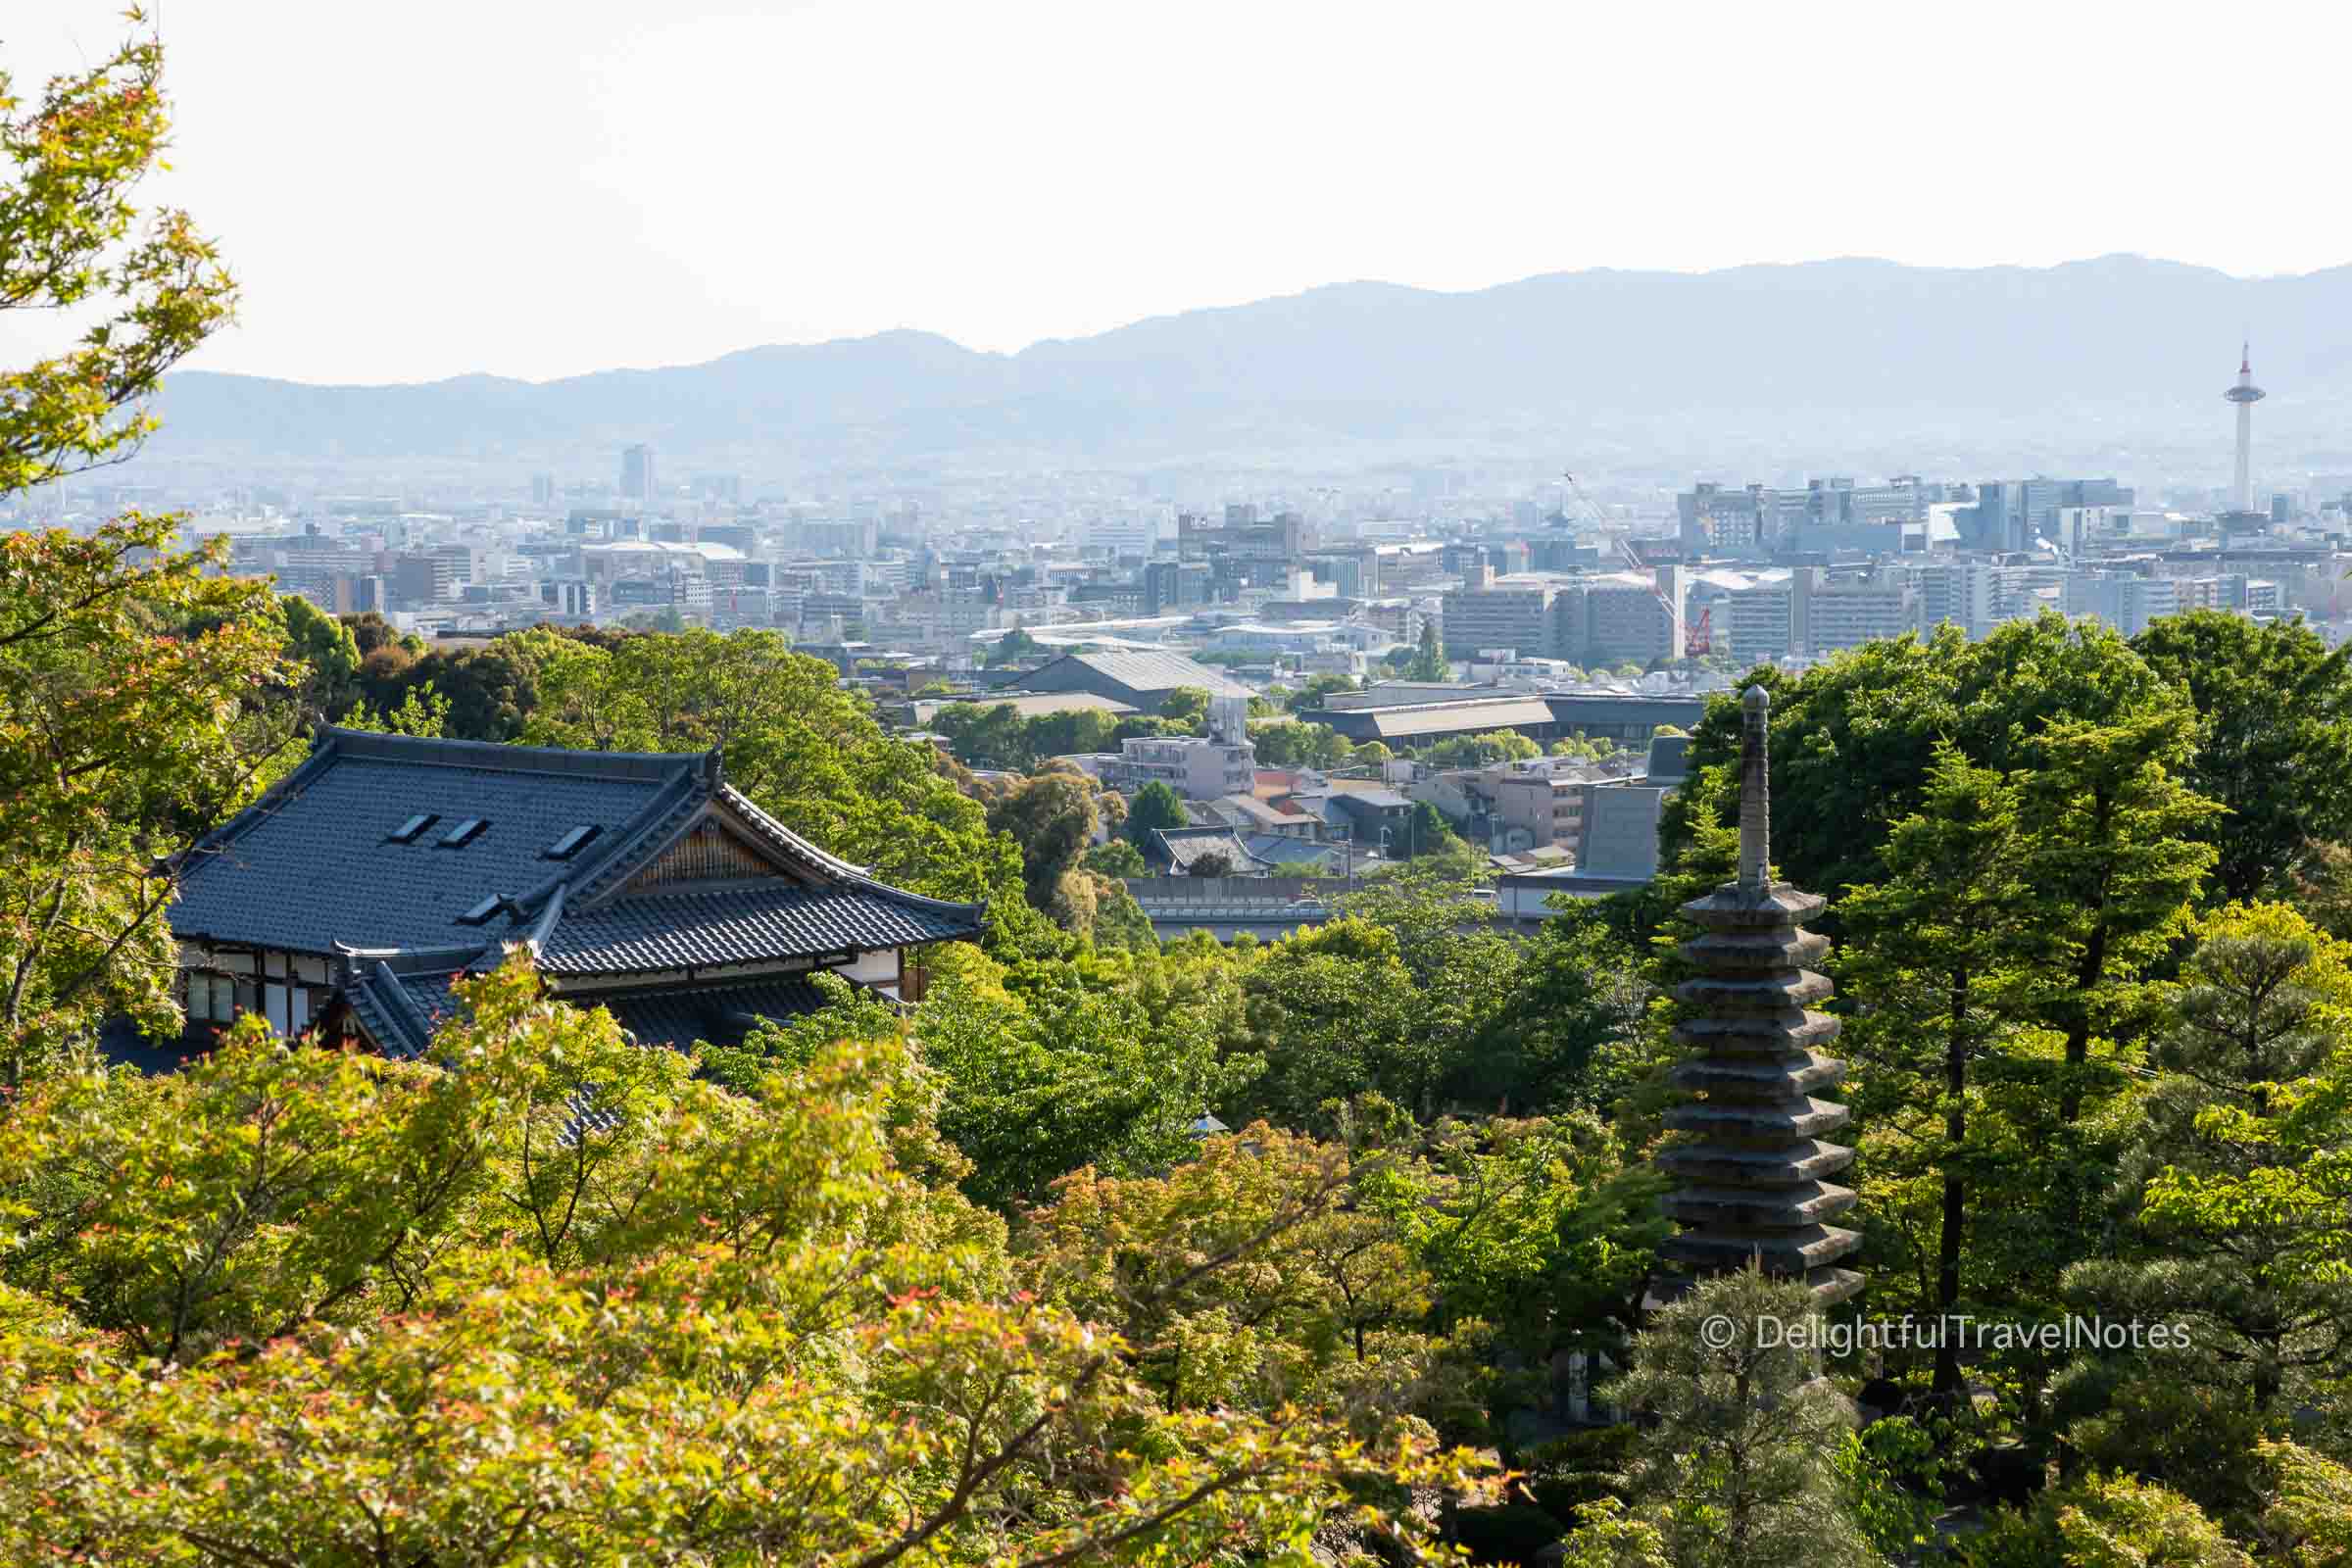 View of Kyoto from Kiyomizu-dera temple